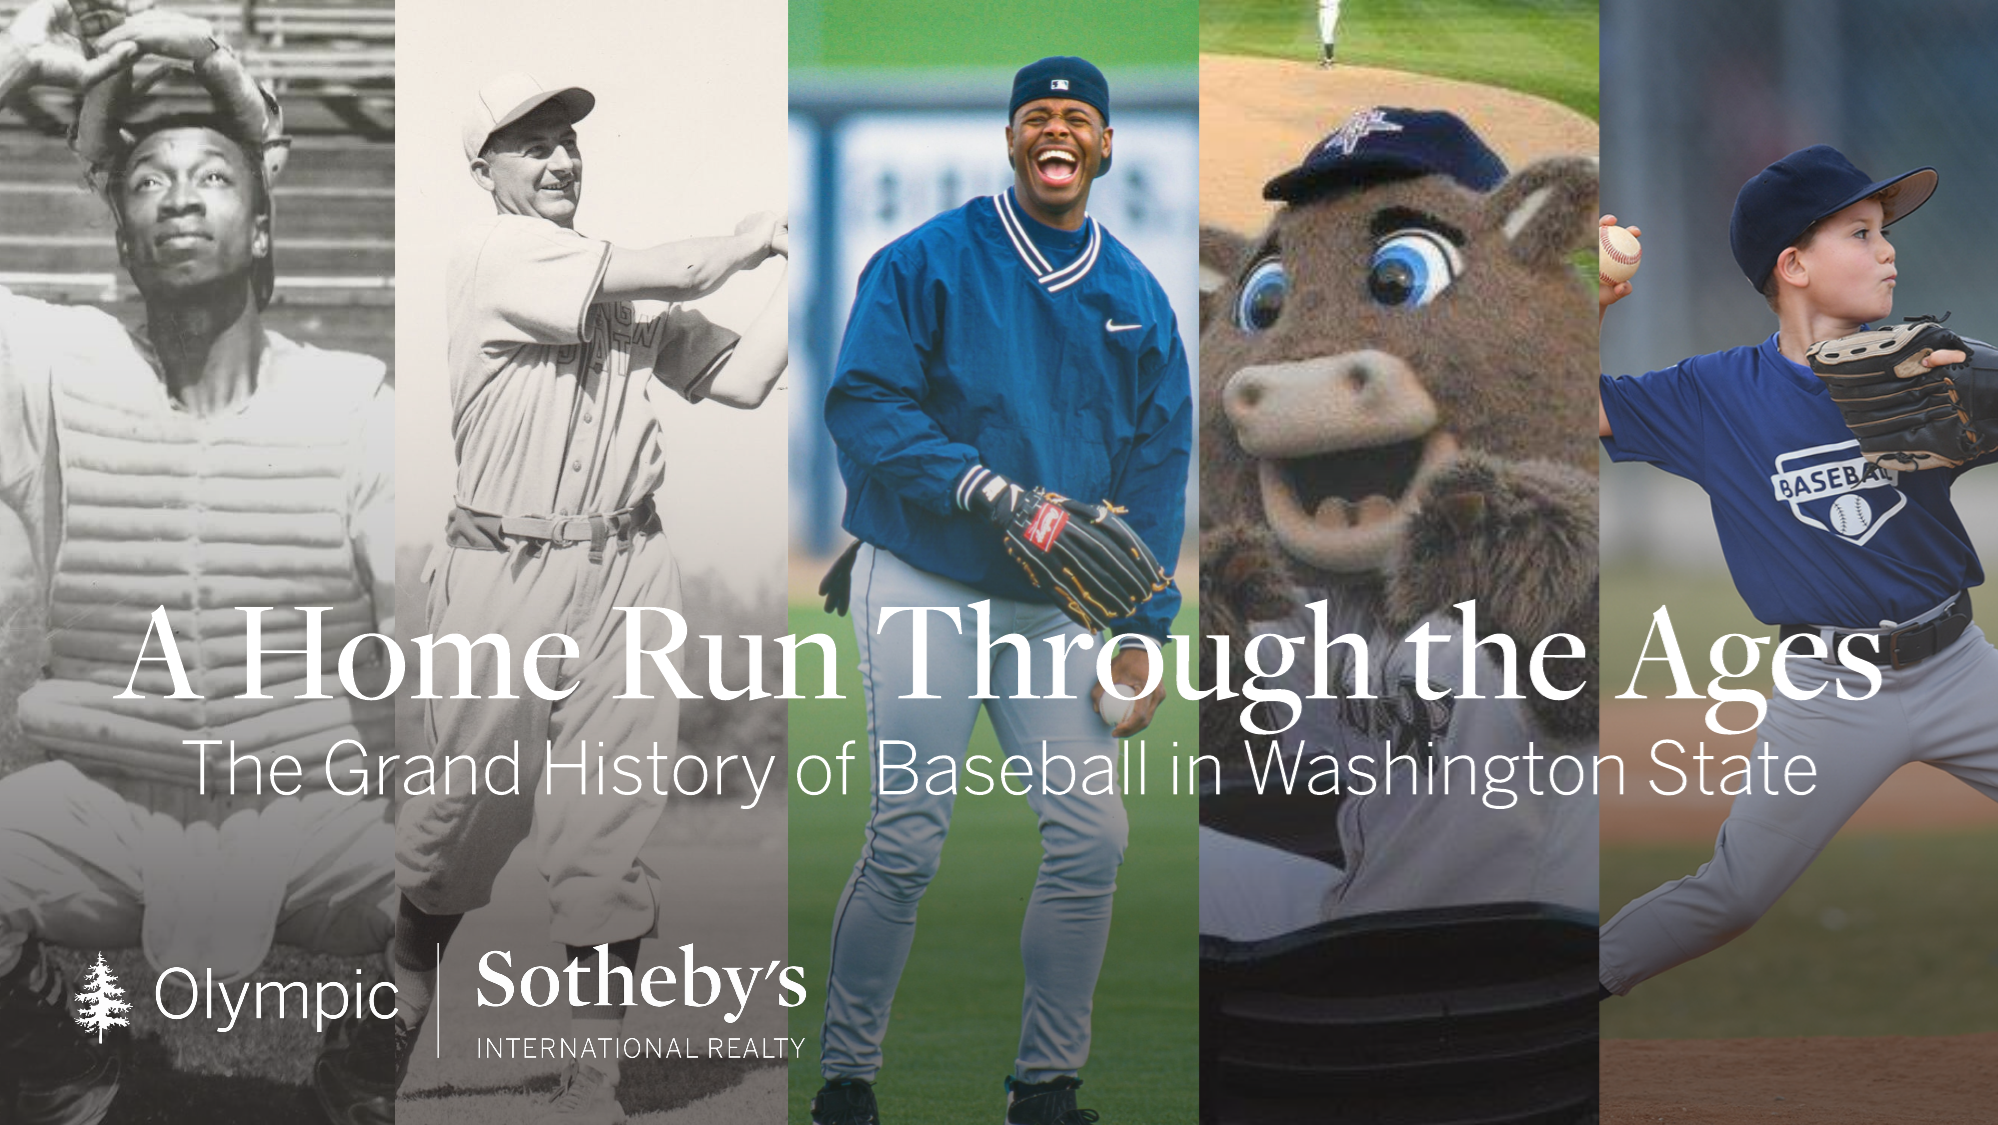  History of Baseball in Washington State